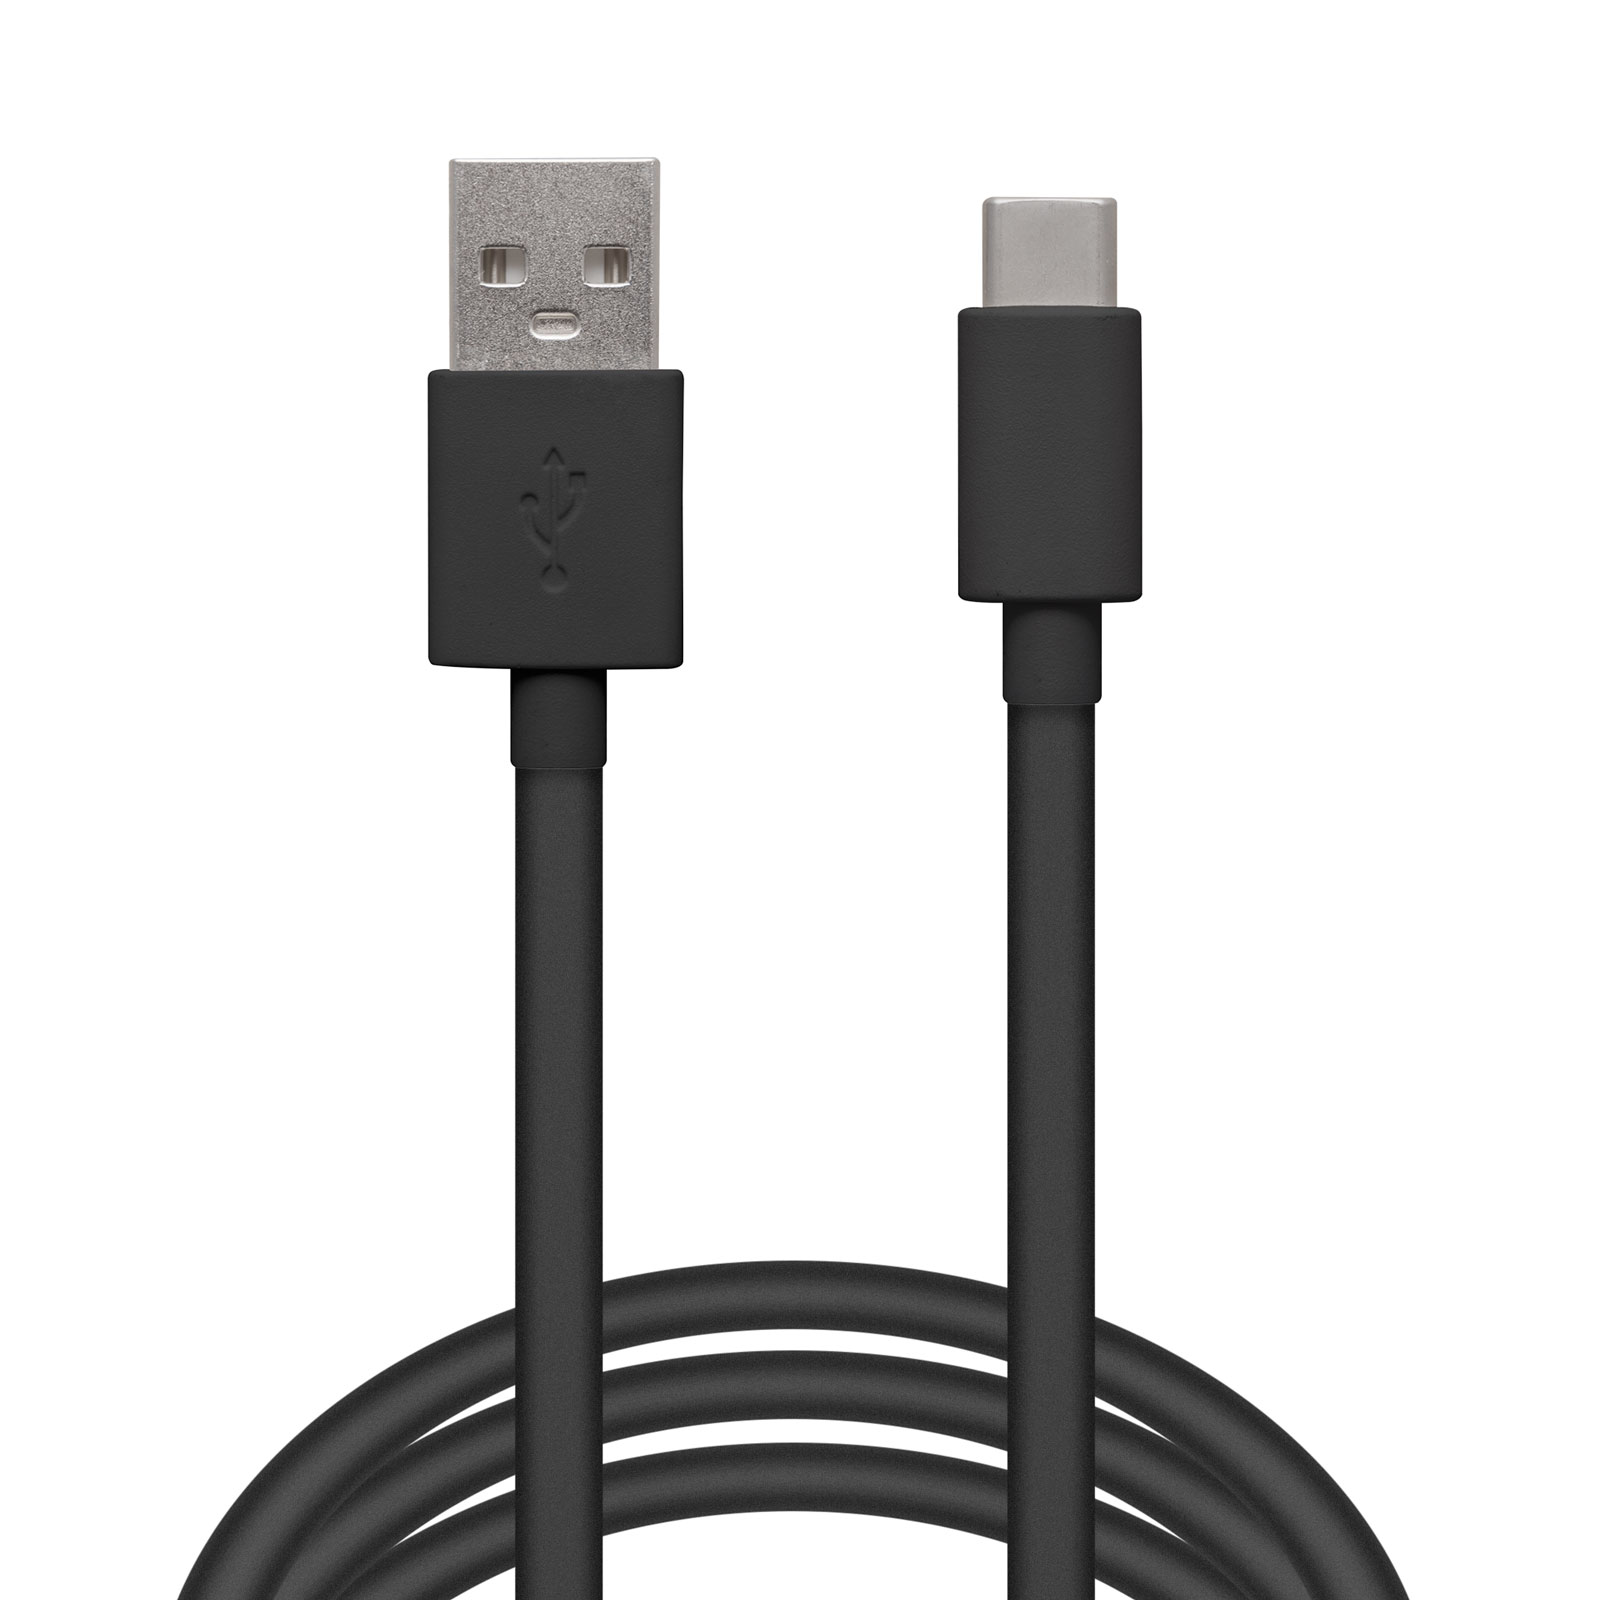 Adatkábel - USB Type-C - fekete - 1 m thumb